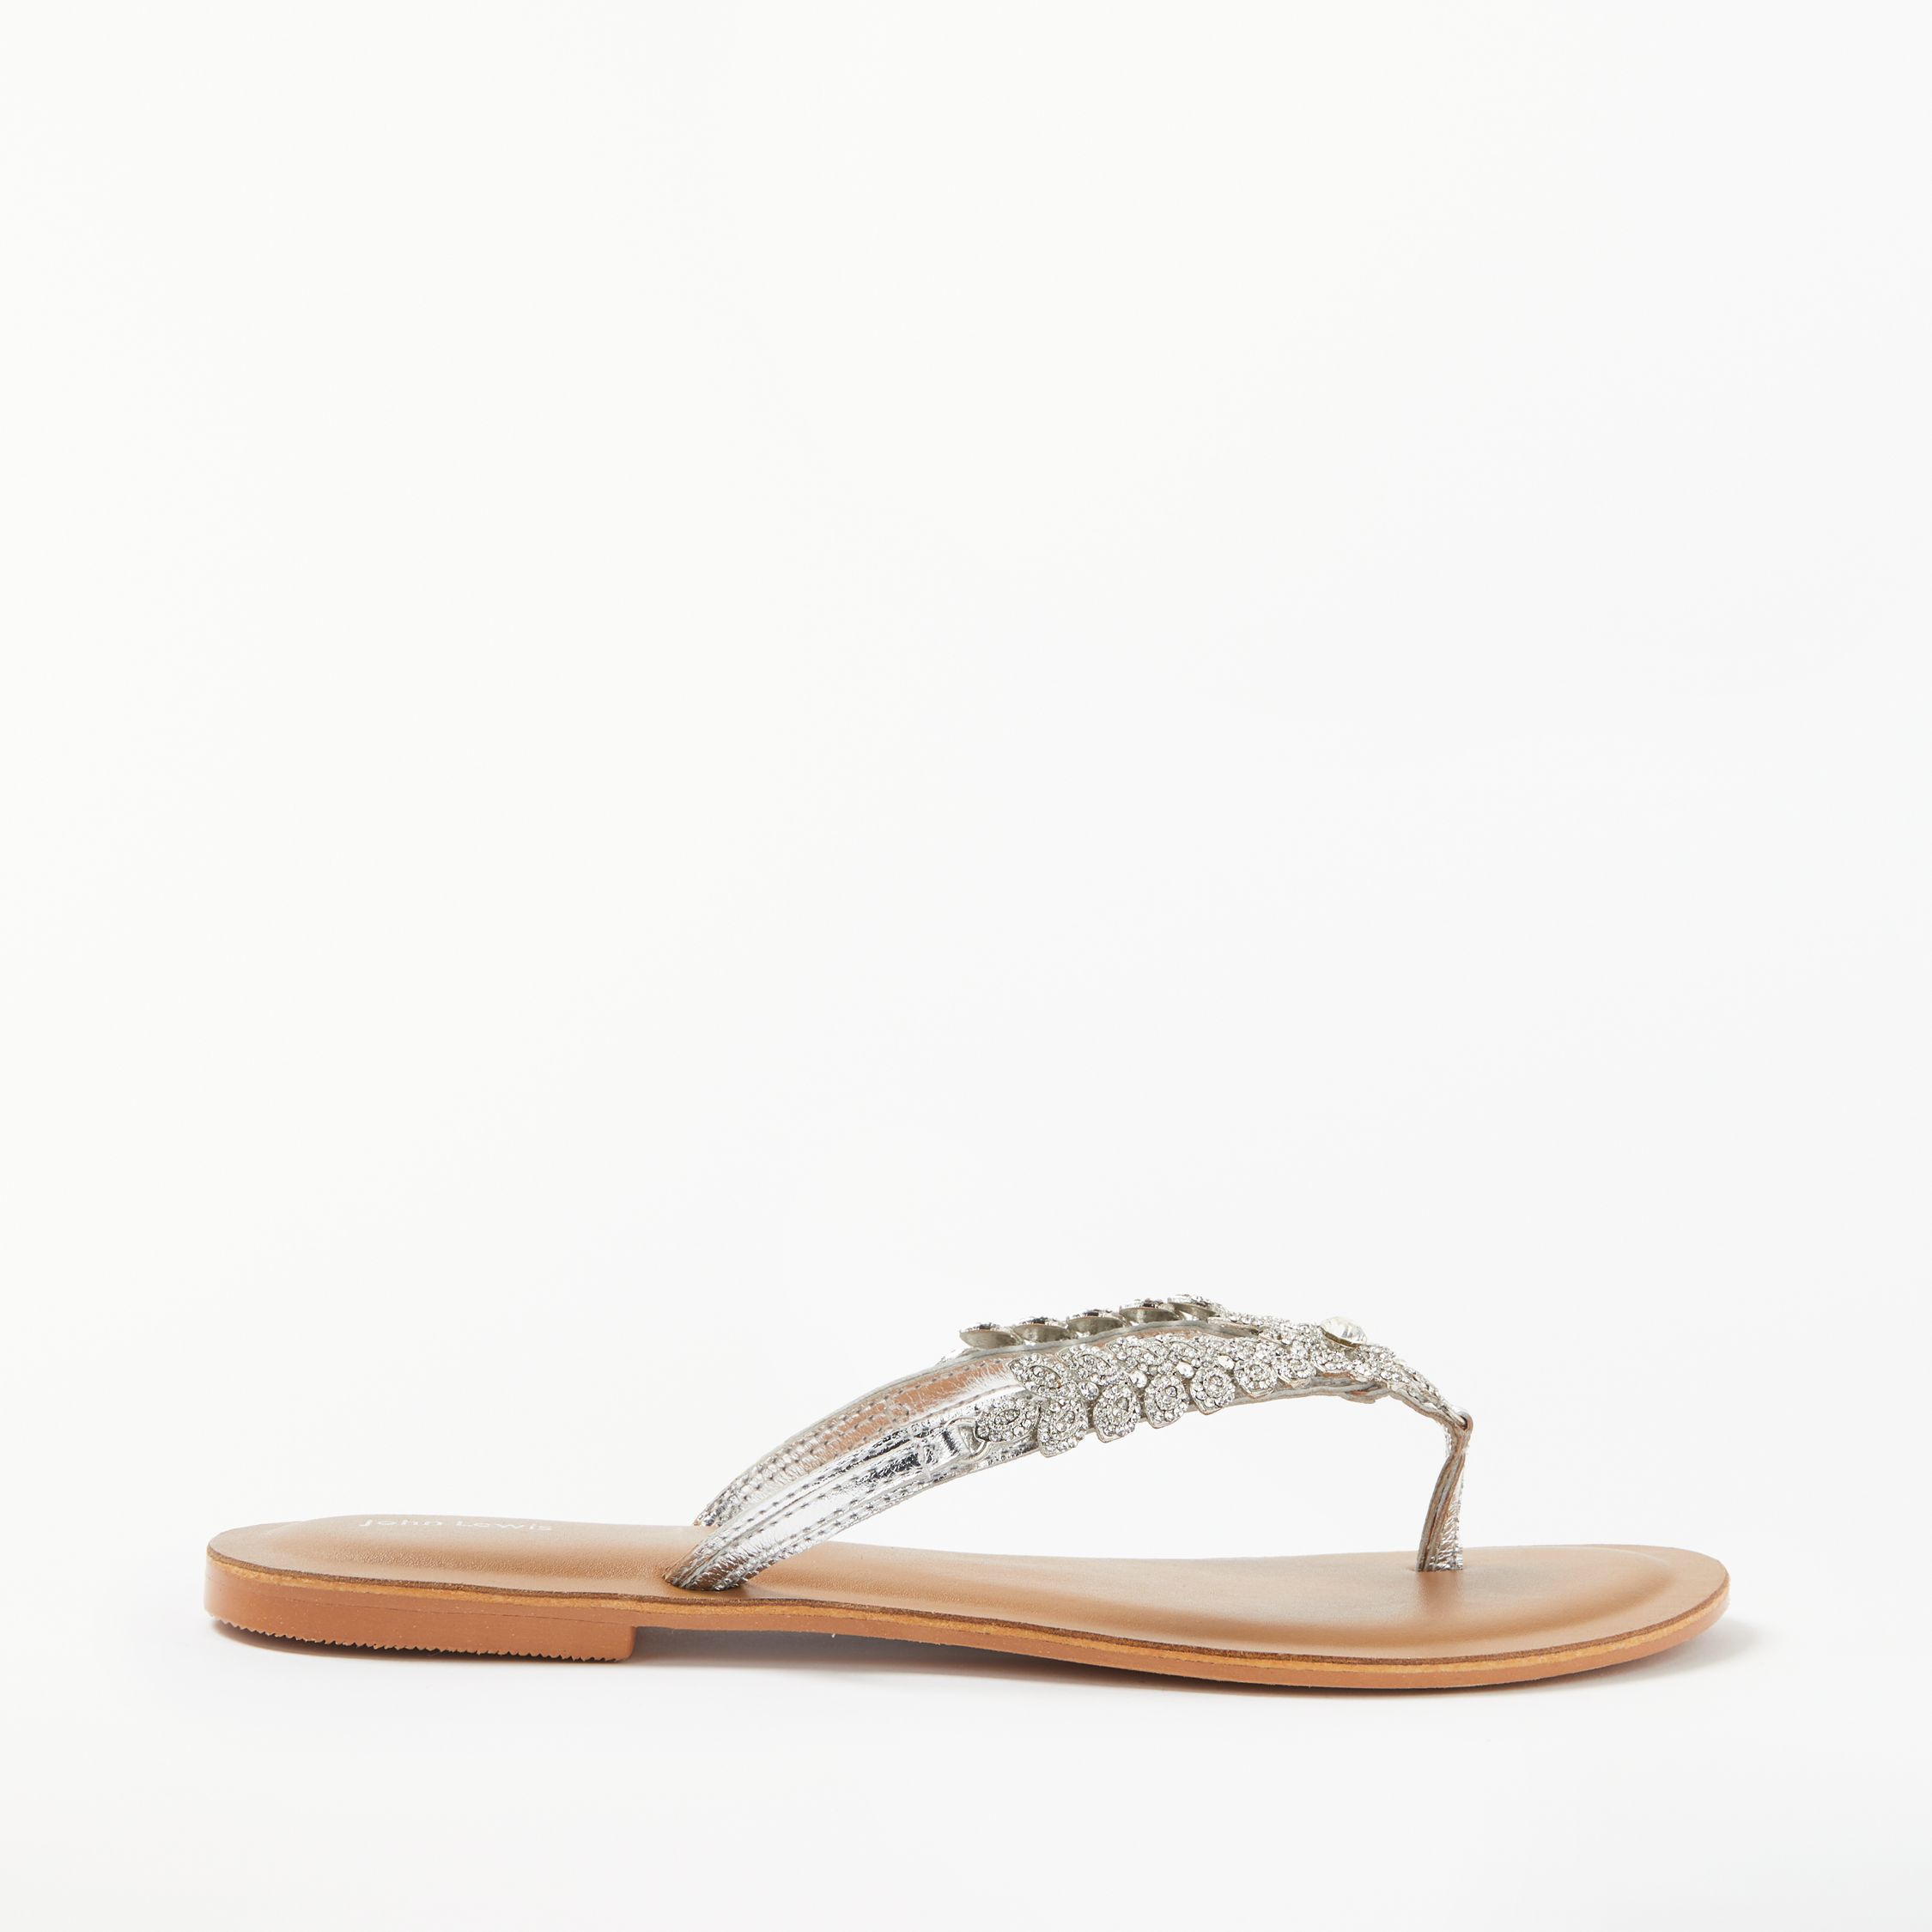 John Lewis & Partners Steph Embellished Toe Post Sandals, Silver